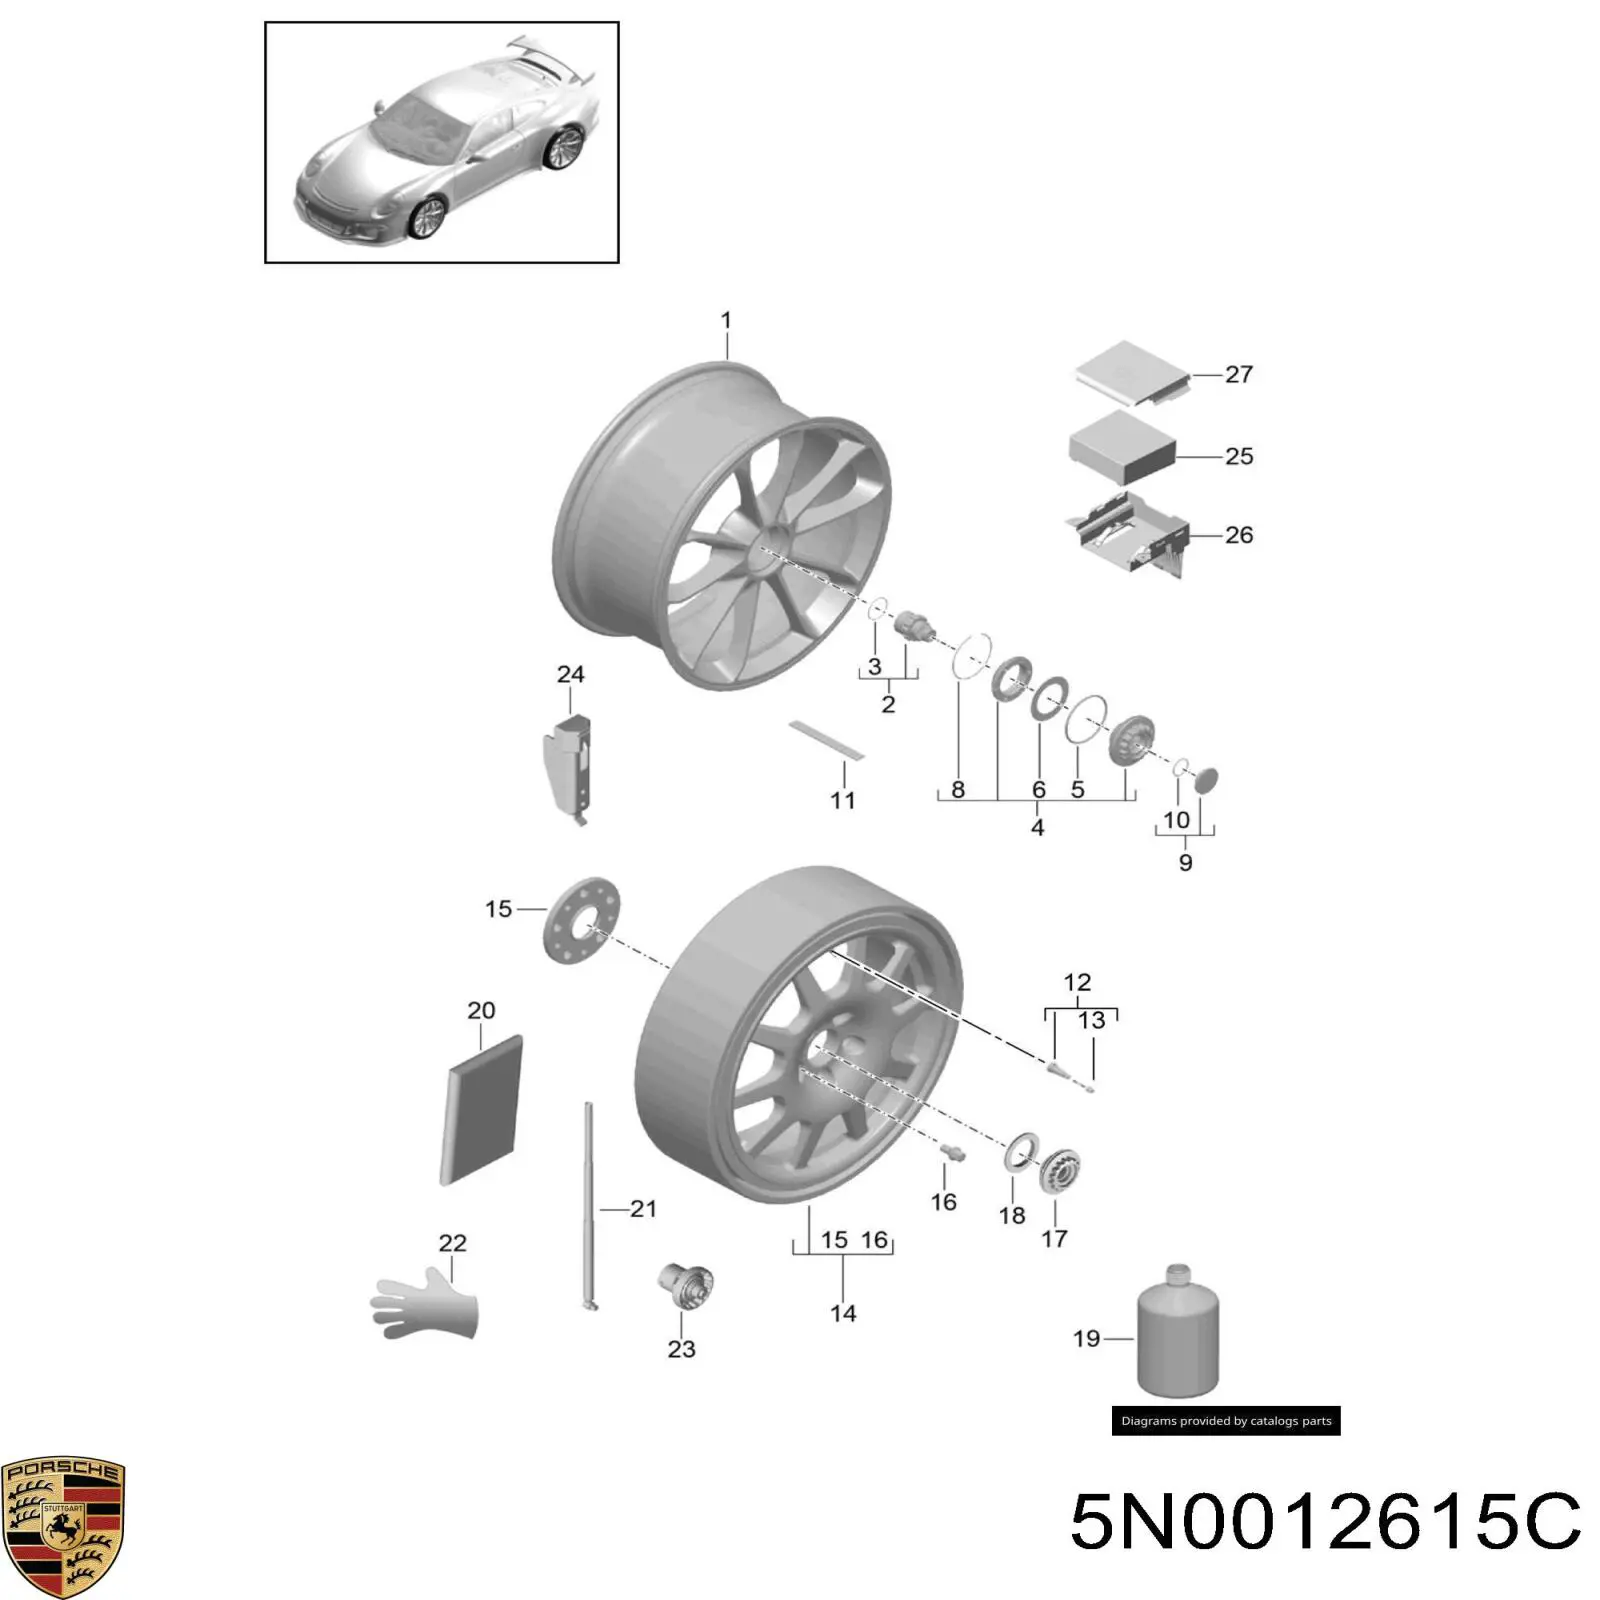 5N0012615C Porsche compresor de inflado de neumaticos